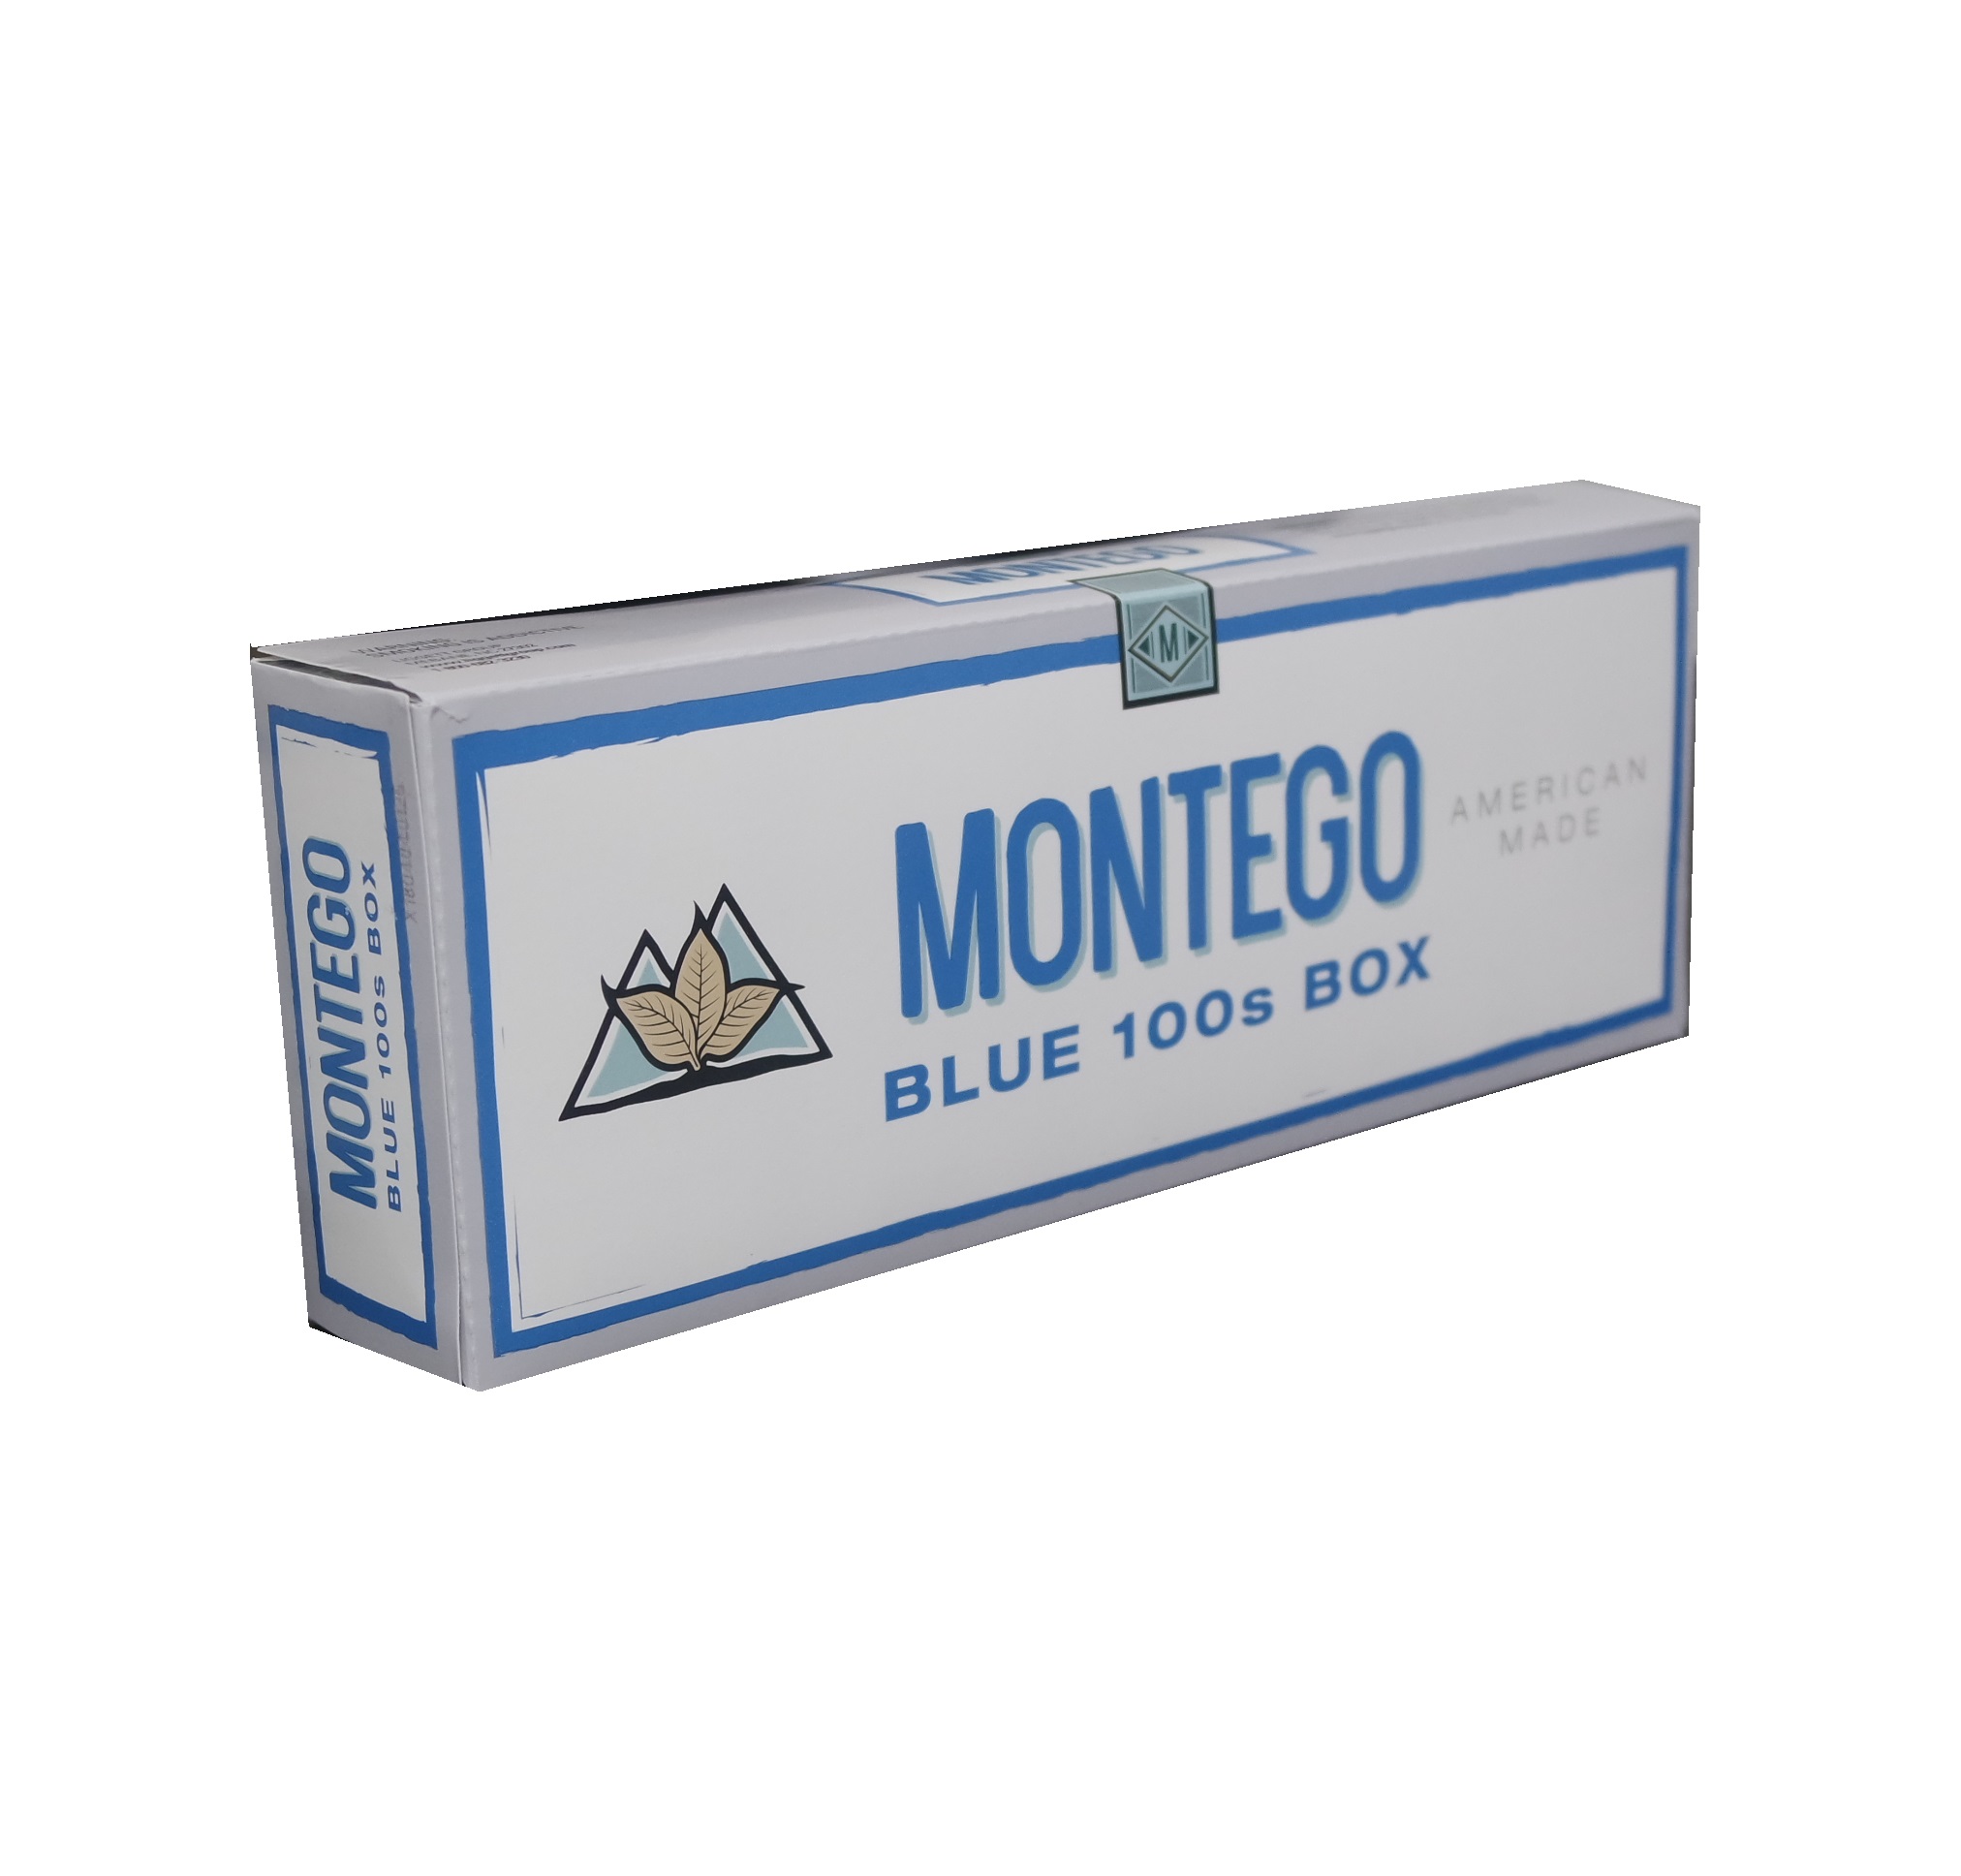 Montego blue 100s box